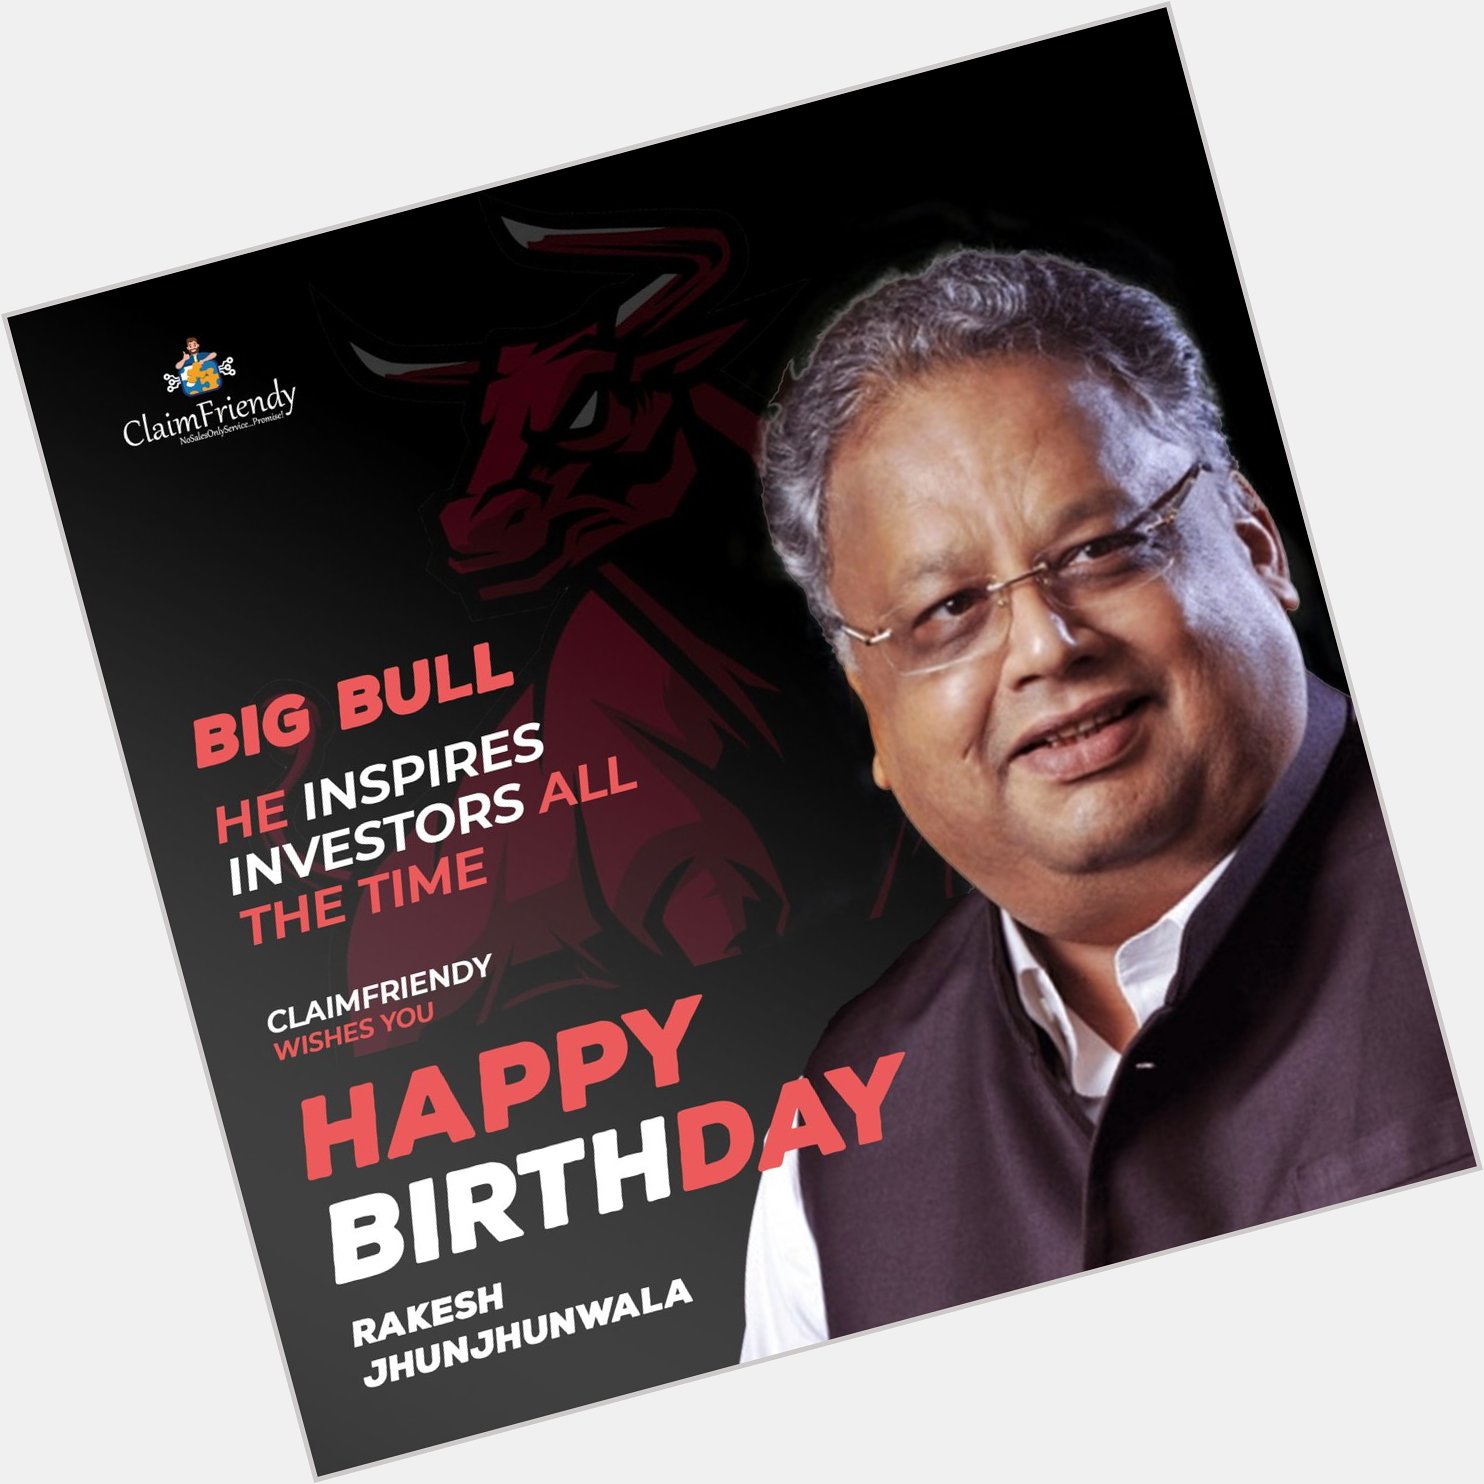 ClaimFriendy Wishes The BIG BULL - Rakesh Jhunjhunwala, Happy Birthday! 